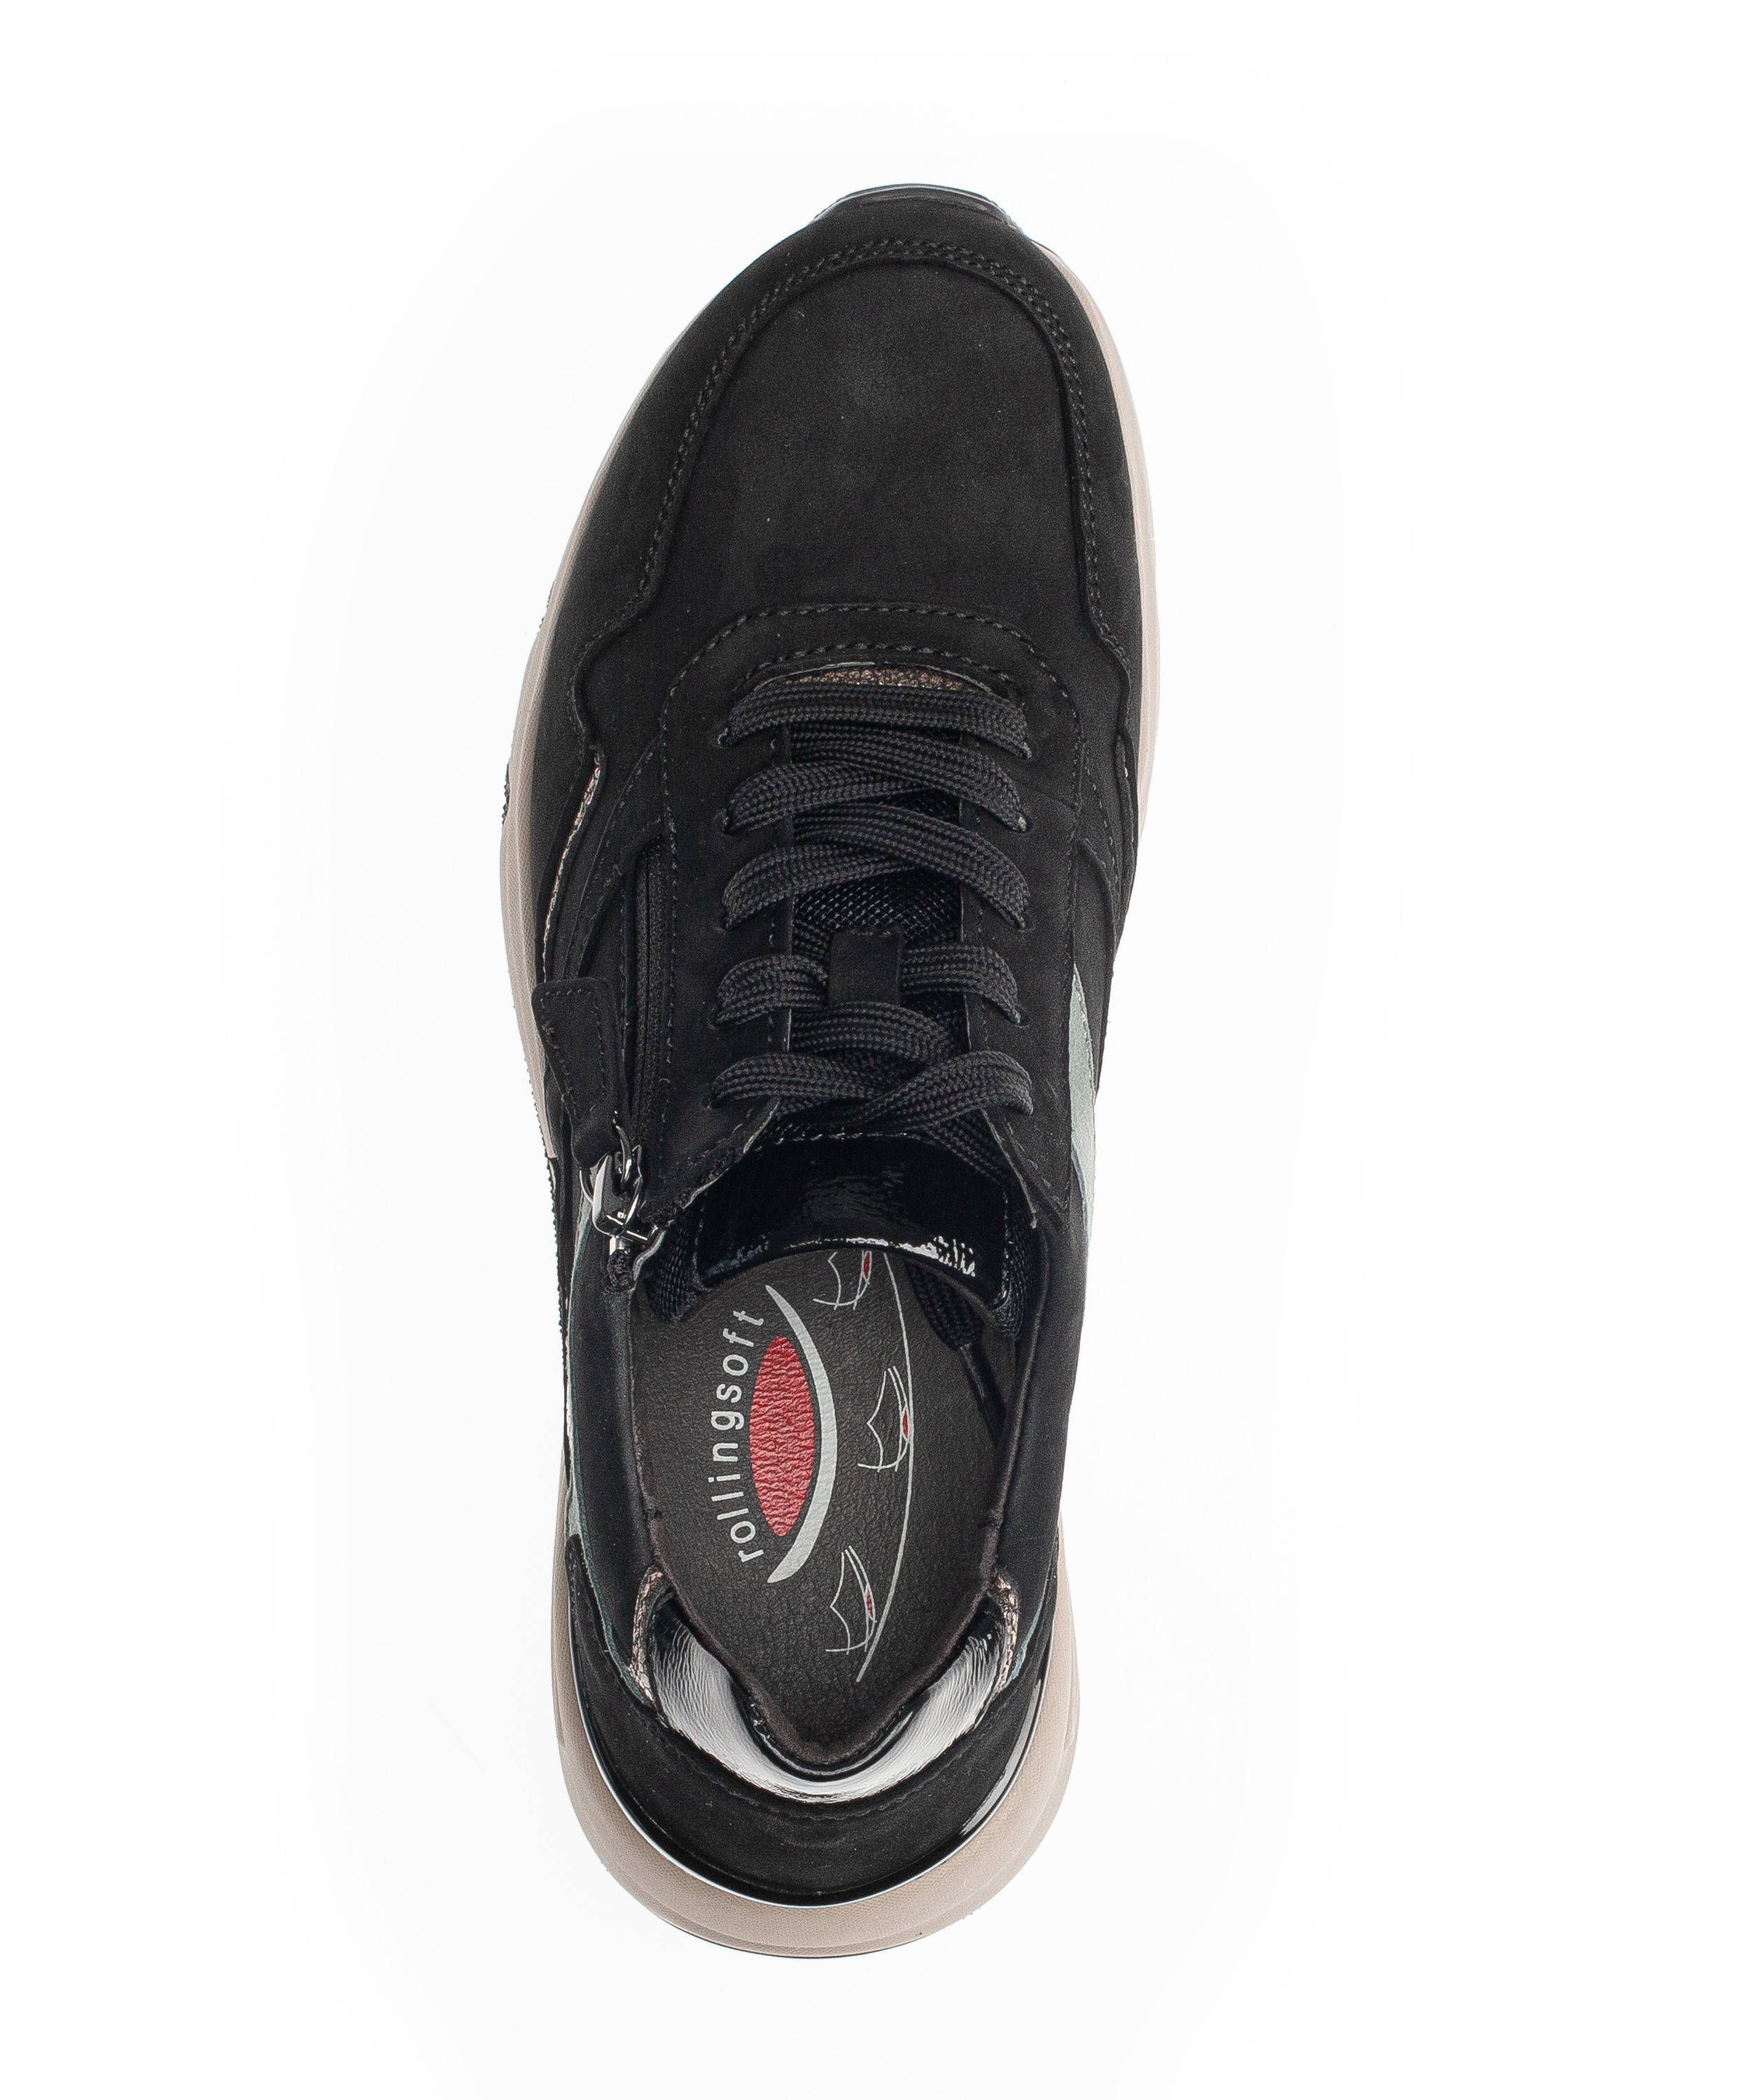 Gabor Shoes Sneaker Low - Schwarz Leder/Synthetik